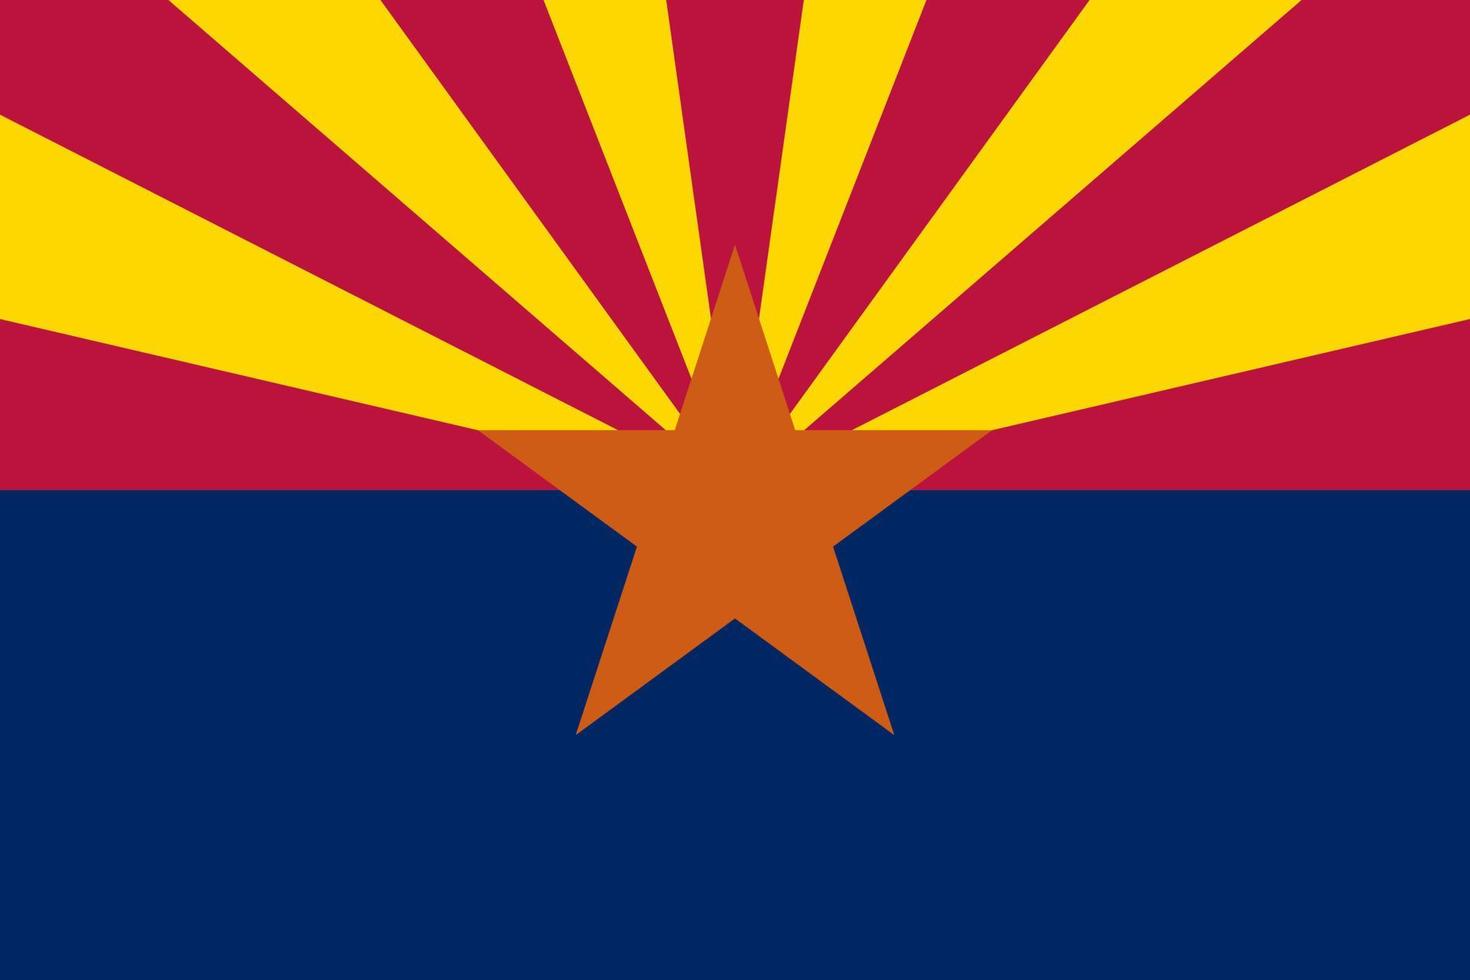 Arizona state flag. Vector illustration.